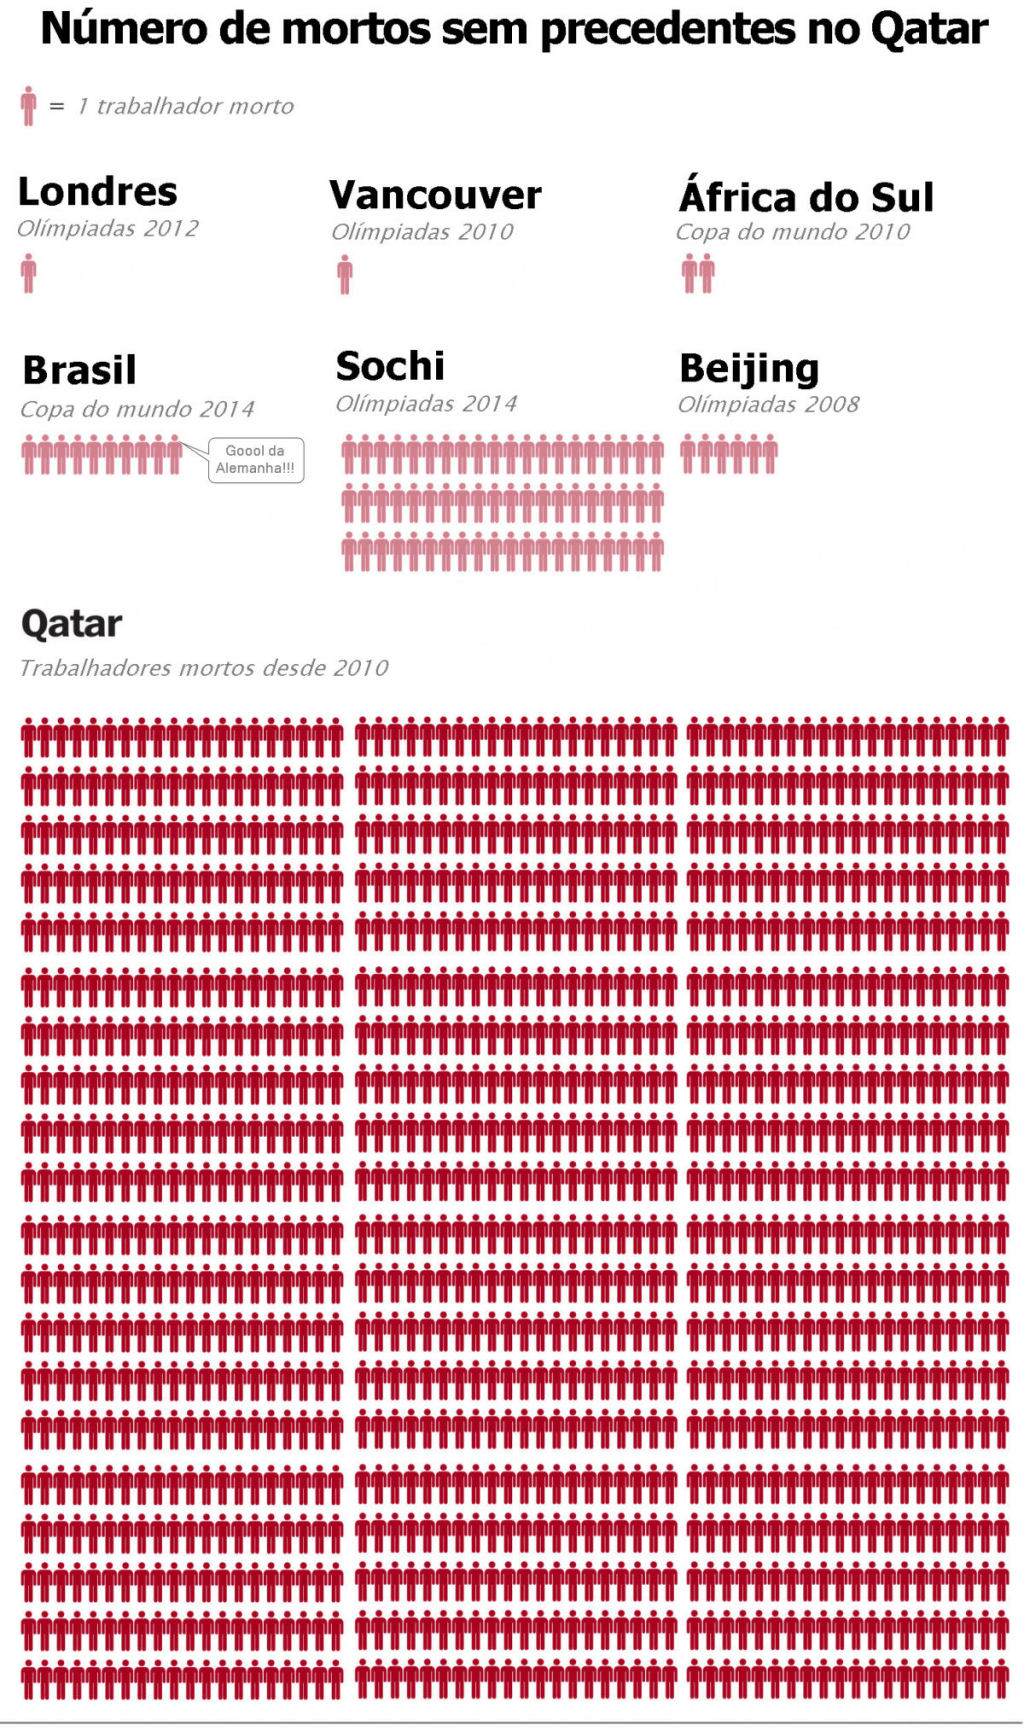 O nmero de mortos na preparao para o Mundial do Qatar 2022  alarmante